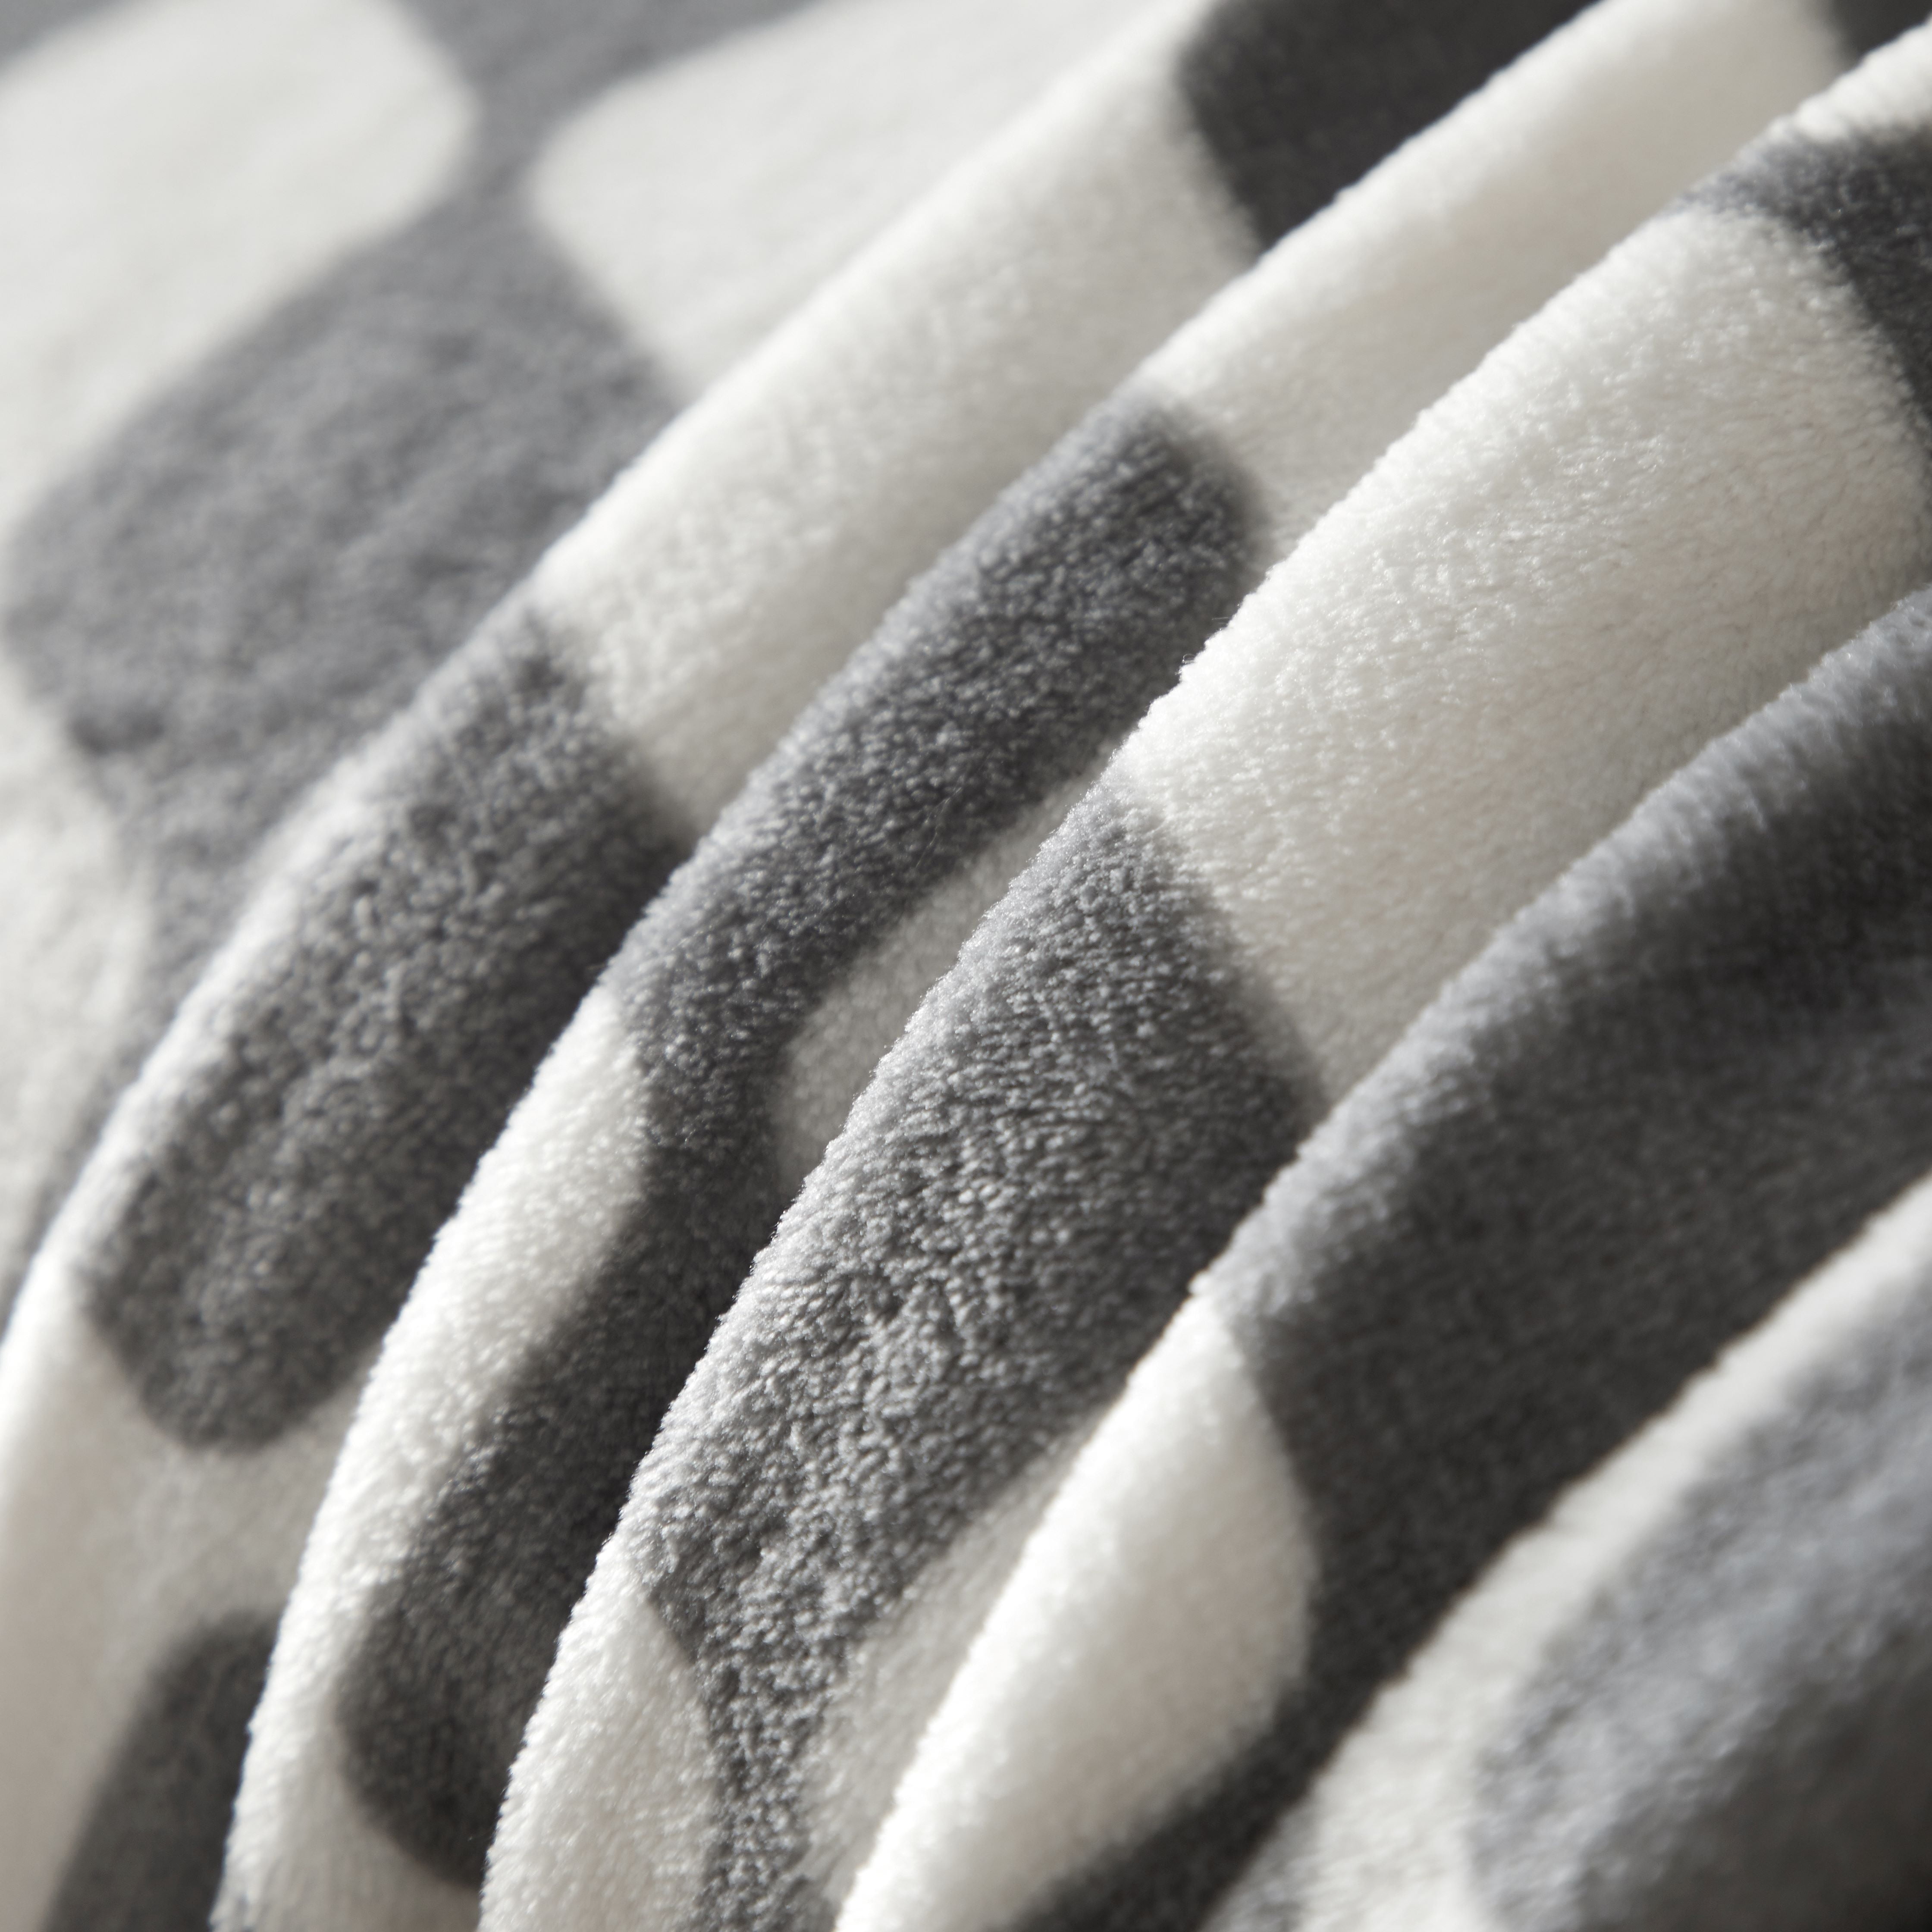 Mainstays Plush Throw Blanket, 50" x 60", Grey and White Check